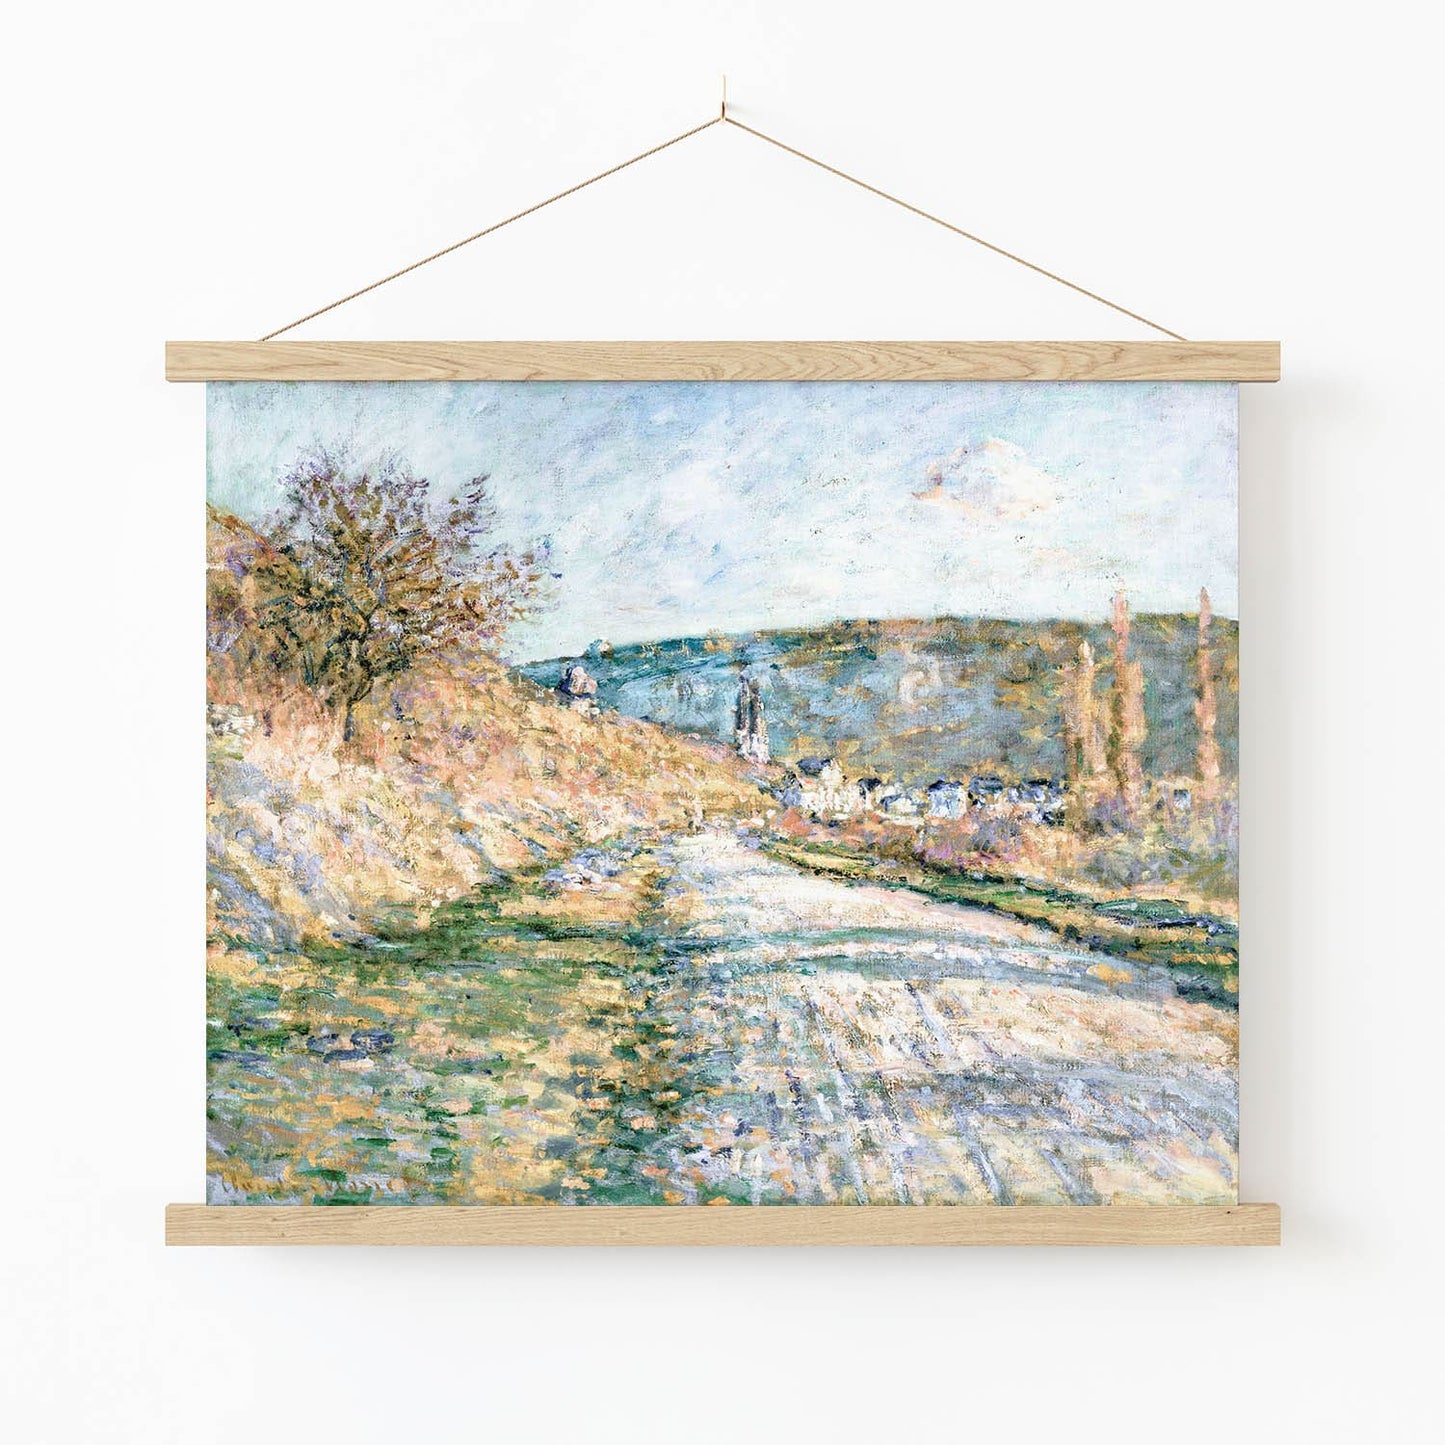 Calming Landscape Art Print in Wood Hanger Frame on Wall